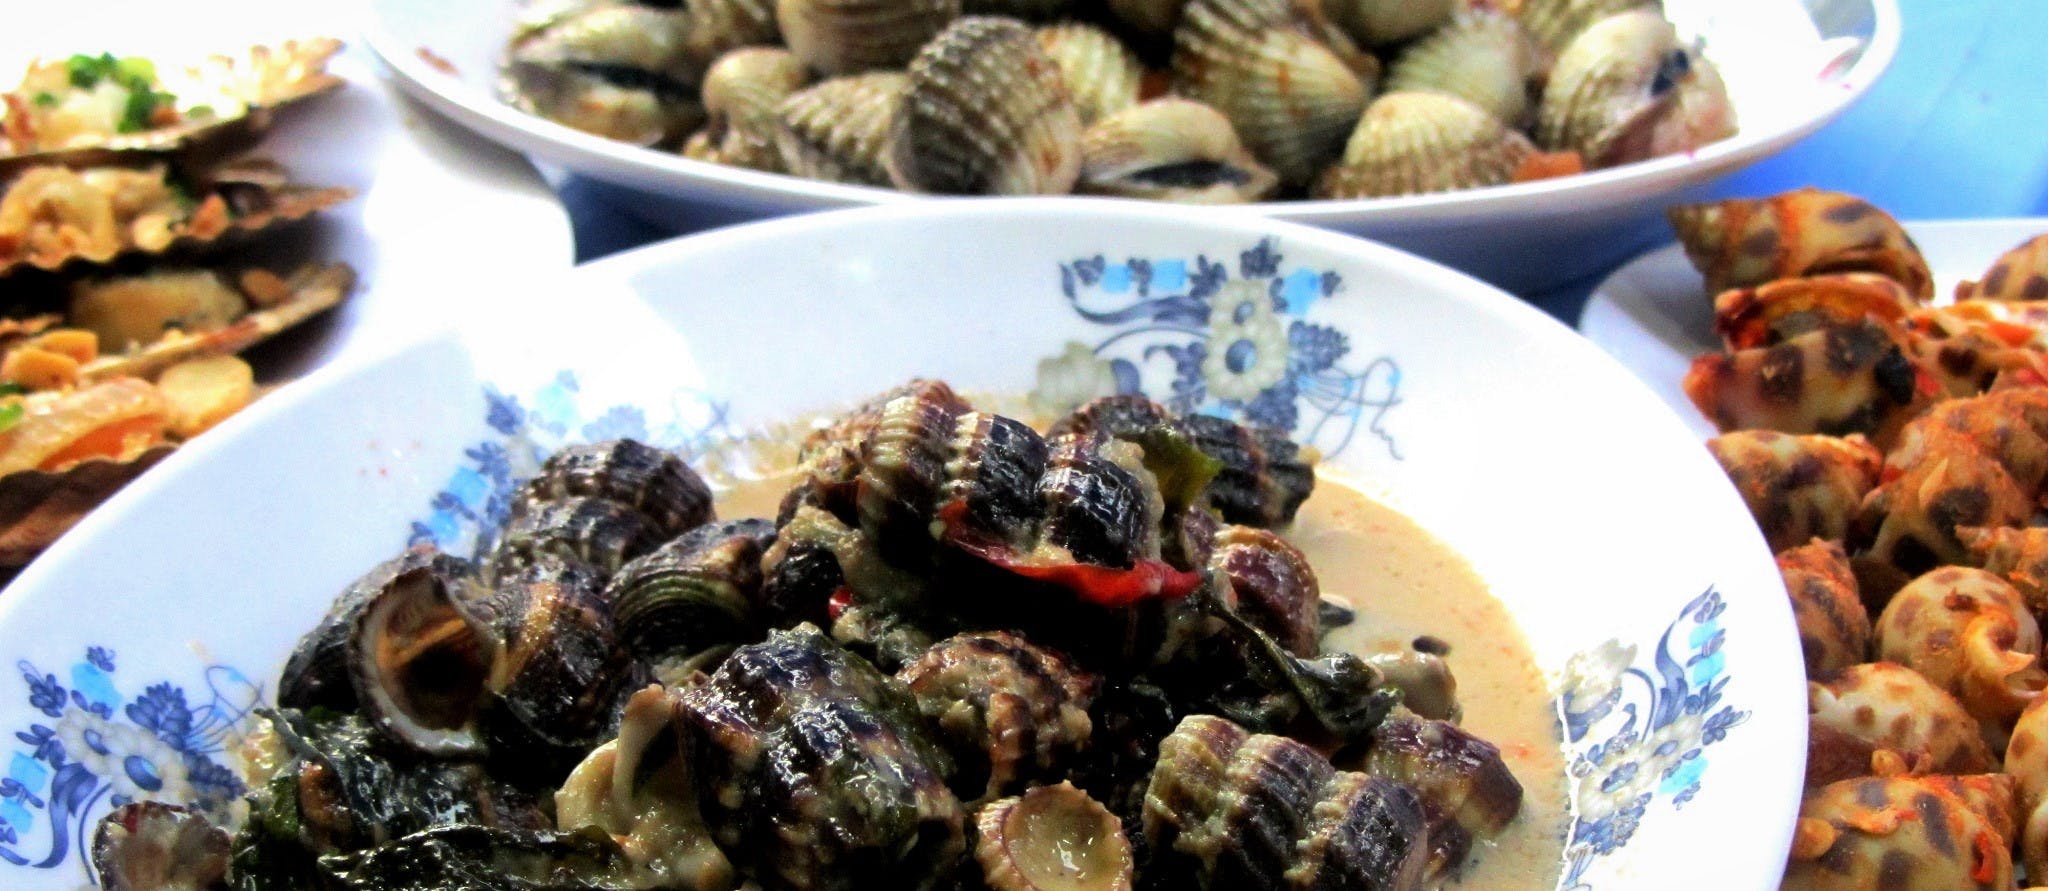 Eating Snails & Shellfish in Vietnam